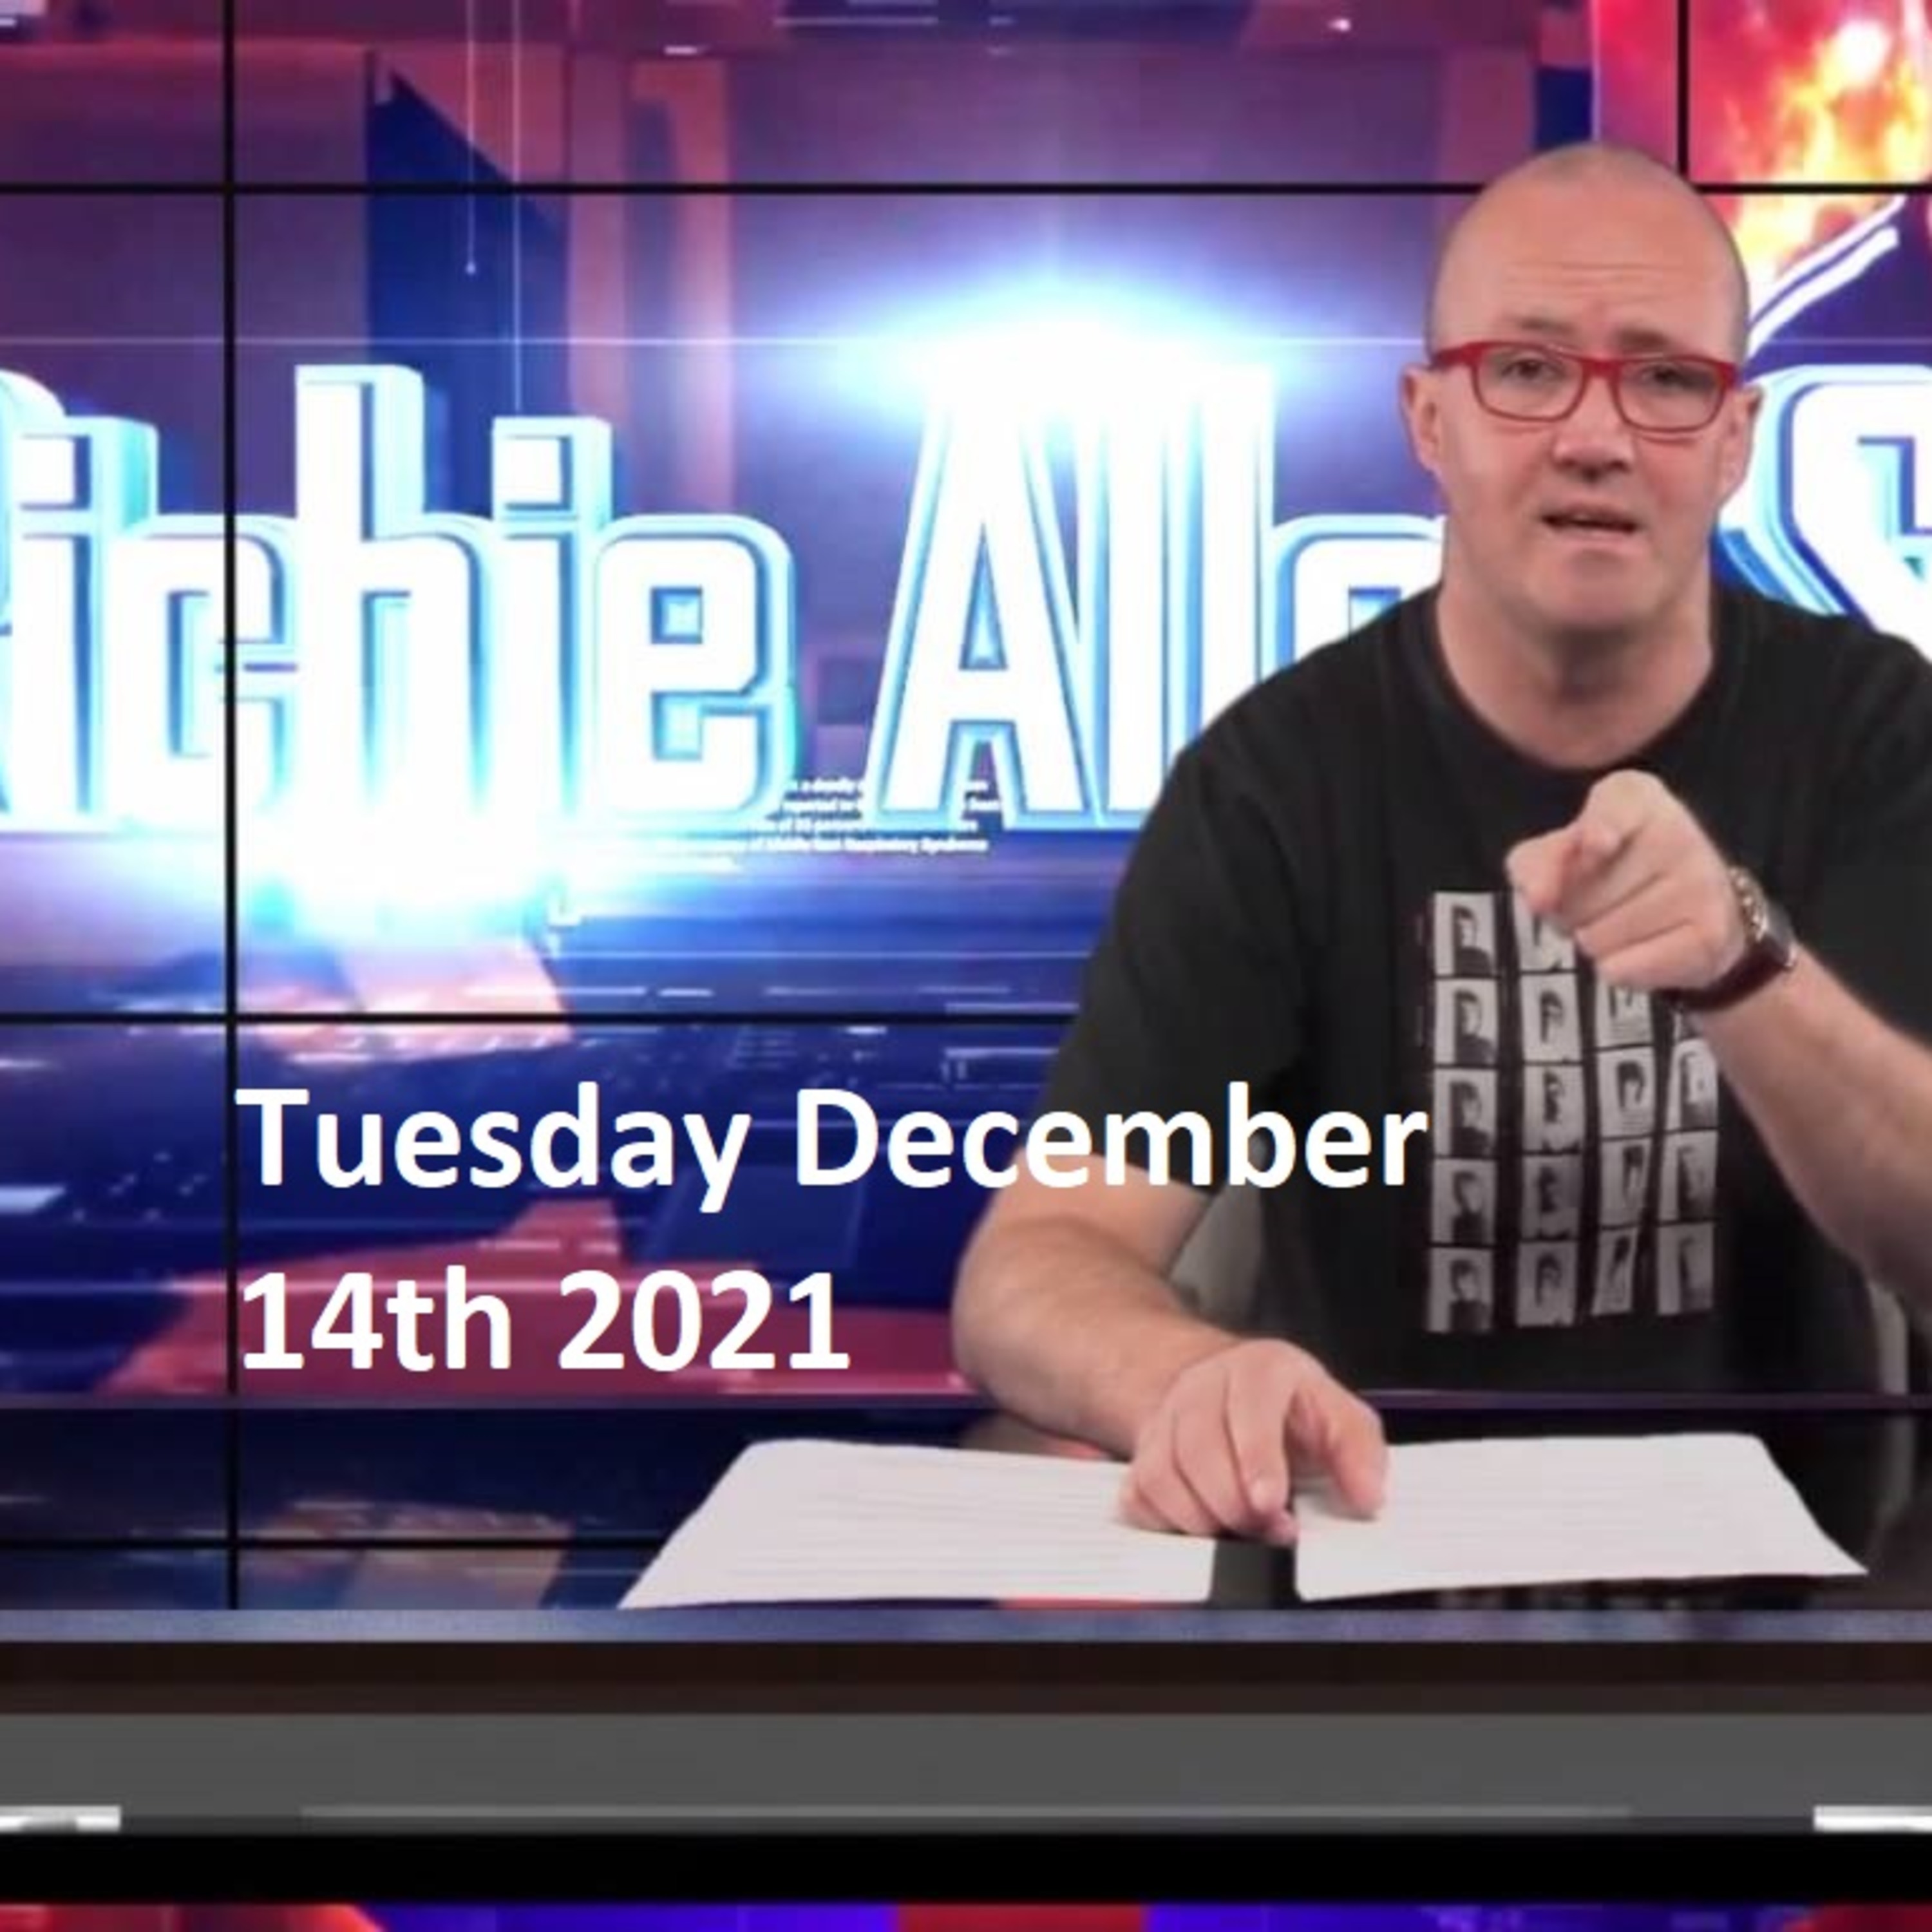 Episode 1380: The Richie Allen Show Tuesday December 14th 2021